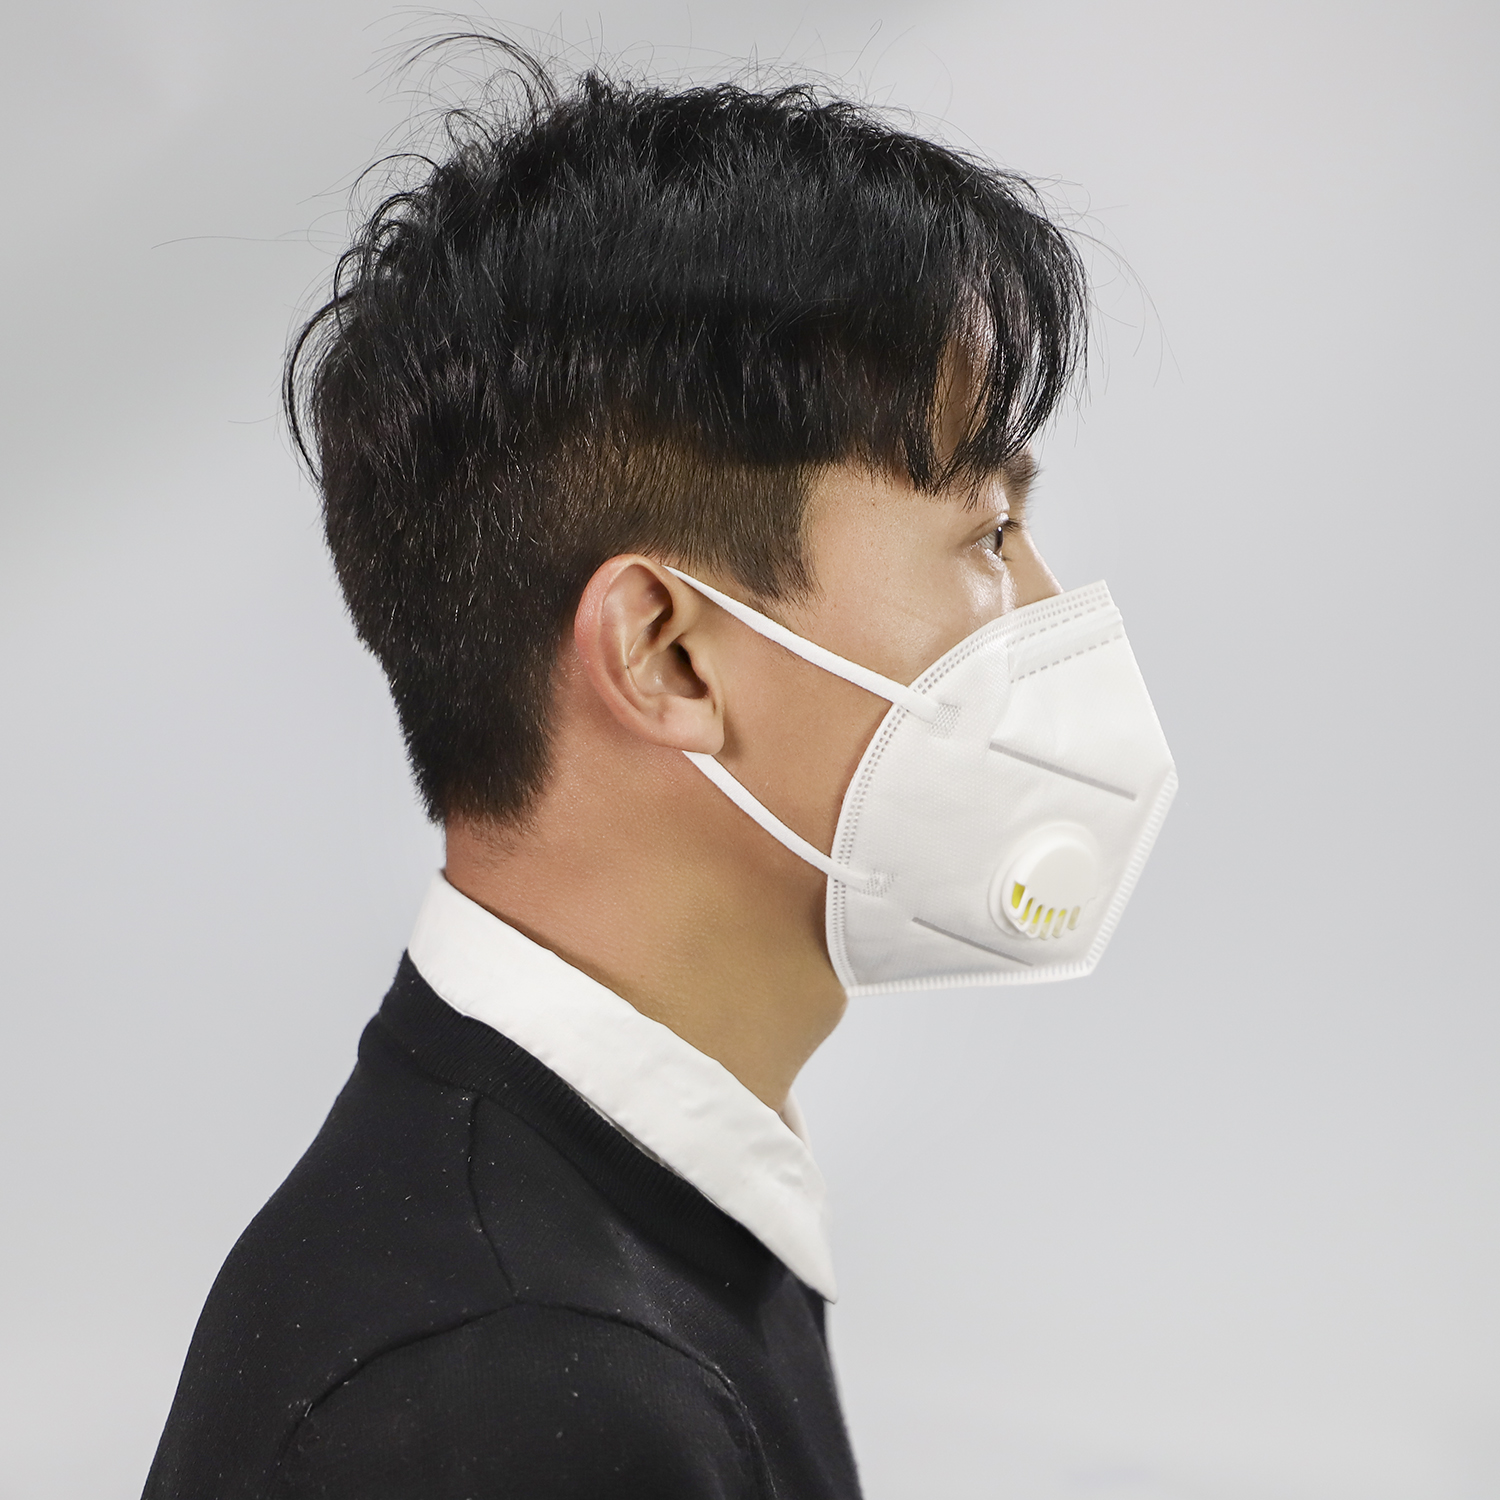 Kn95 Mask Coronavirus COVID-19 Mouth Face Protection Mask Bulk Purchase Available